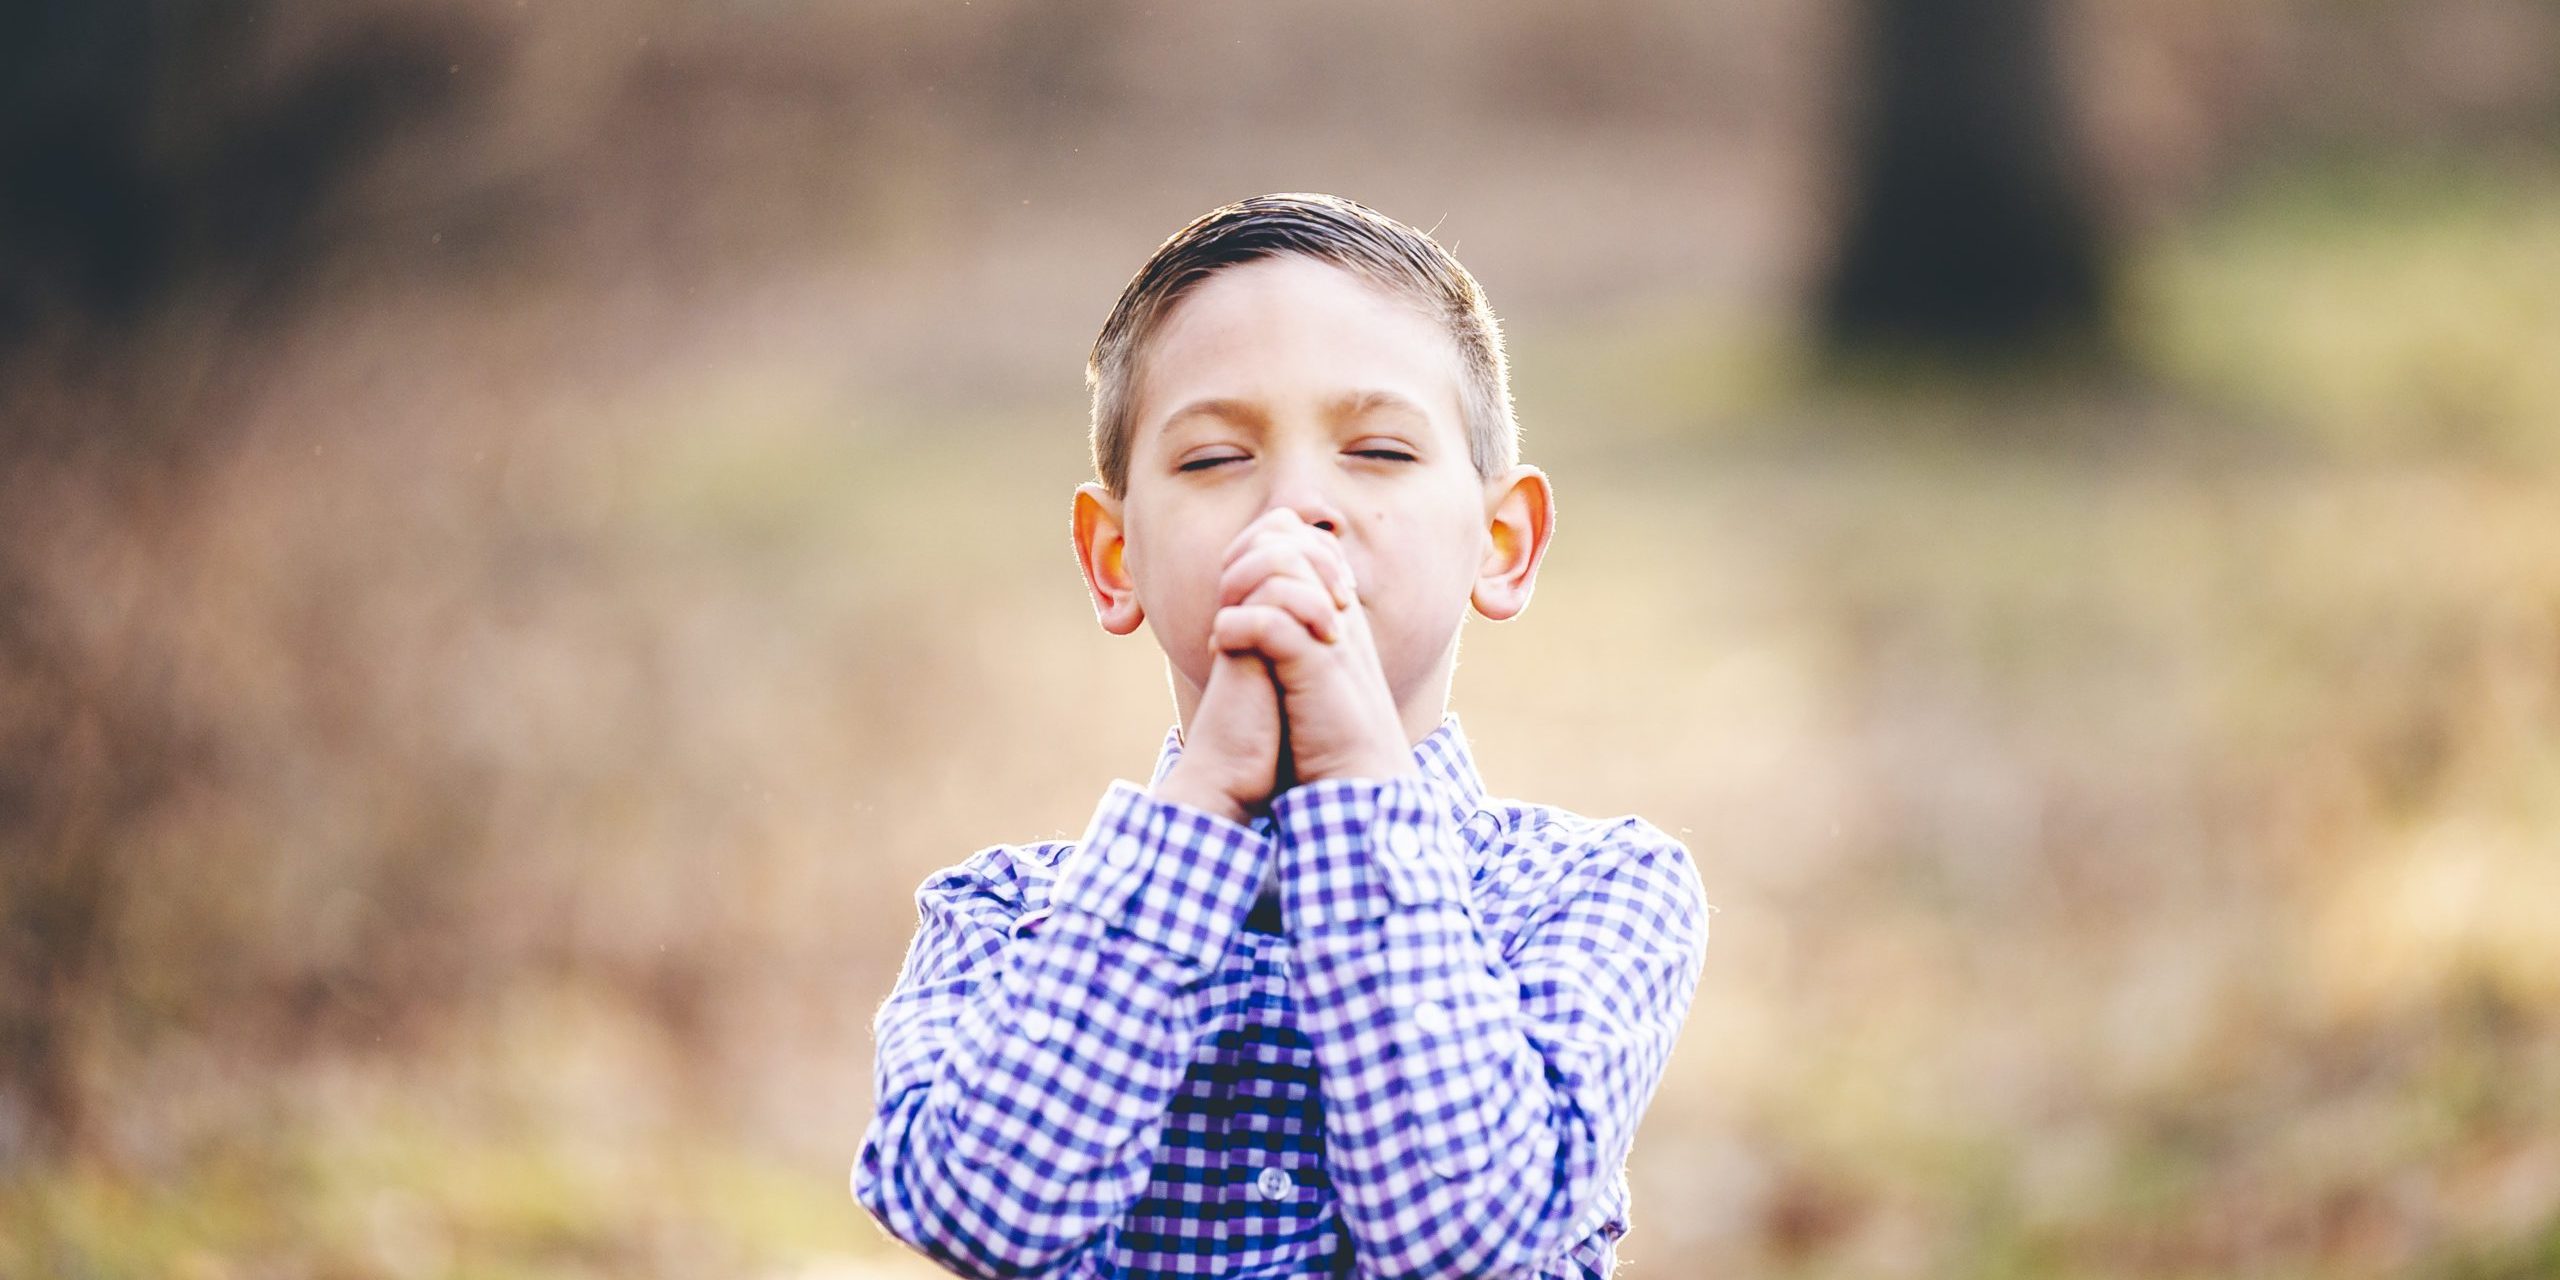 A portrait of a little Christian boy praying